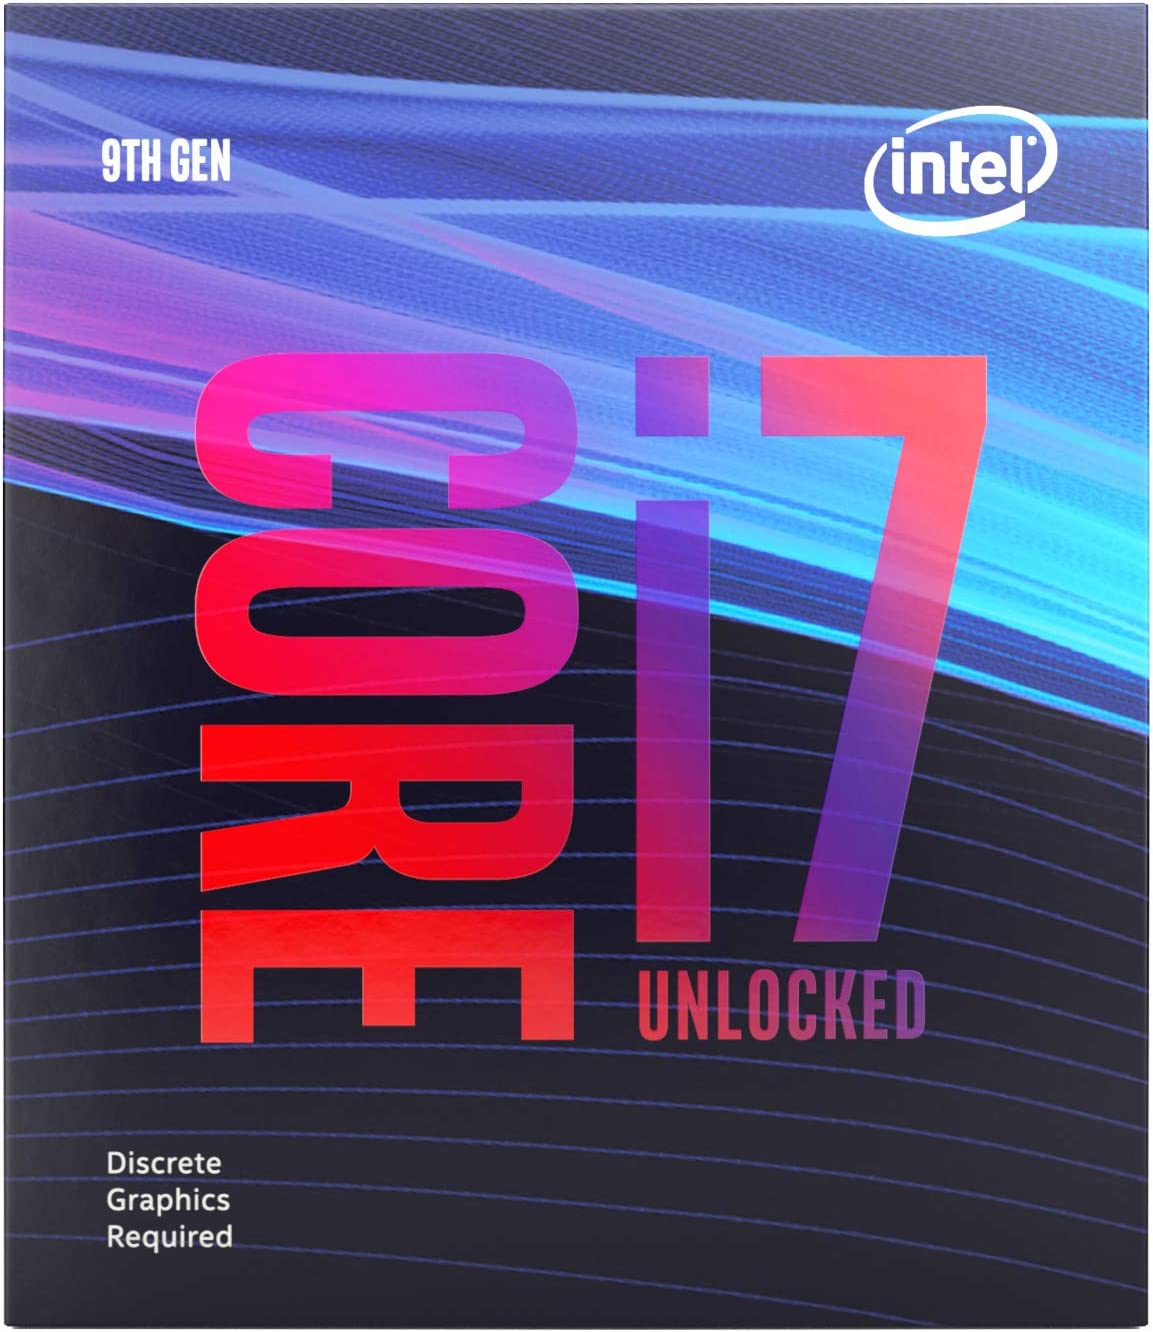 Intel BX80684I79700KF Intel Core i7-9700KF Desktop Processor 8 Cores up to 4.9 GHz Turbo Unlocked without Processor Graphics LGA1151 300 Series 95W